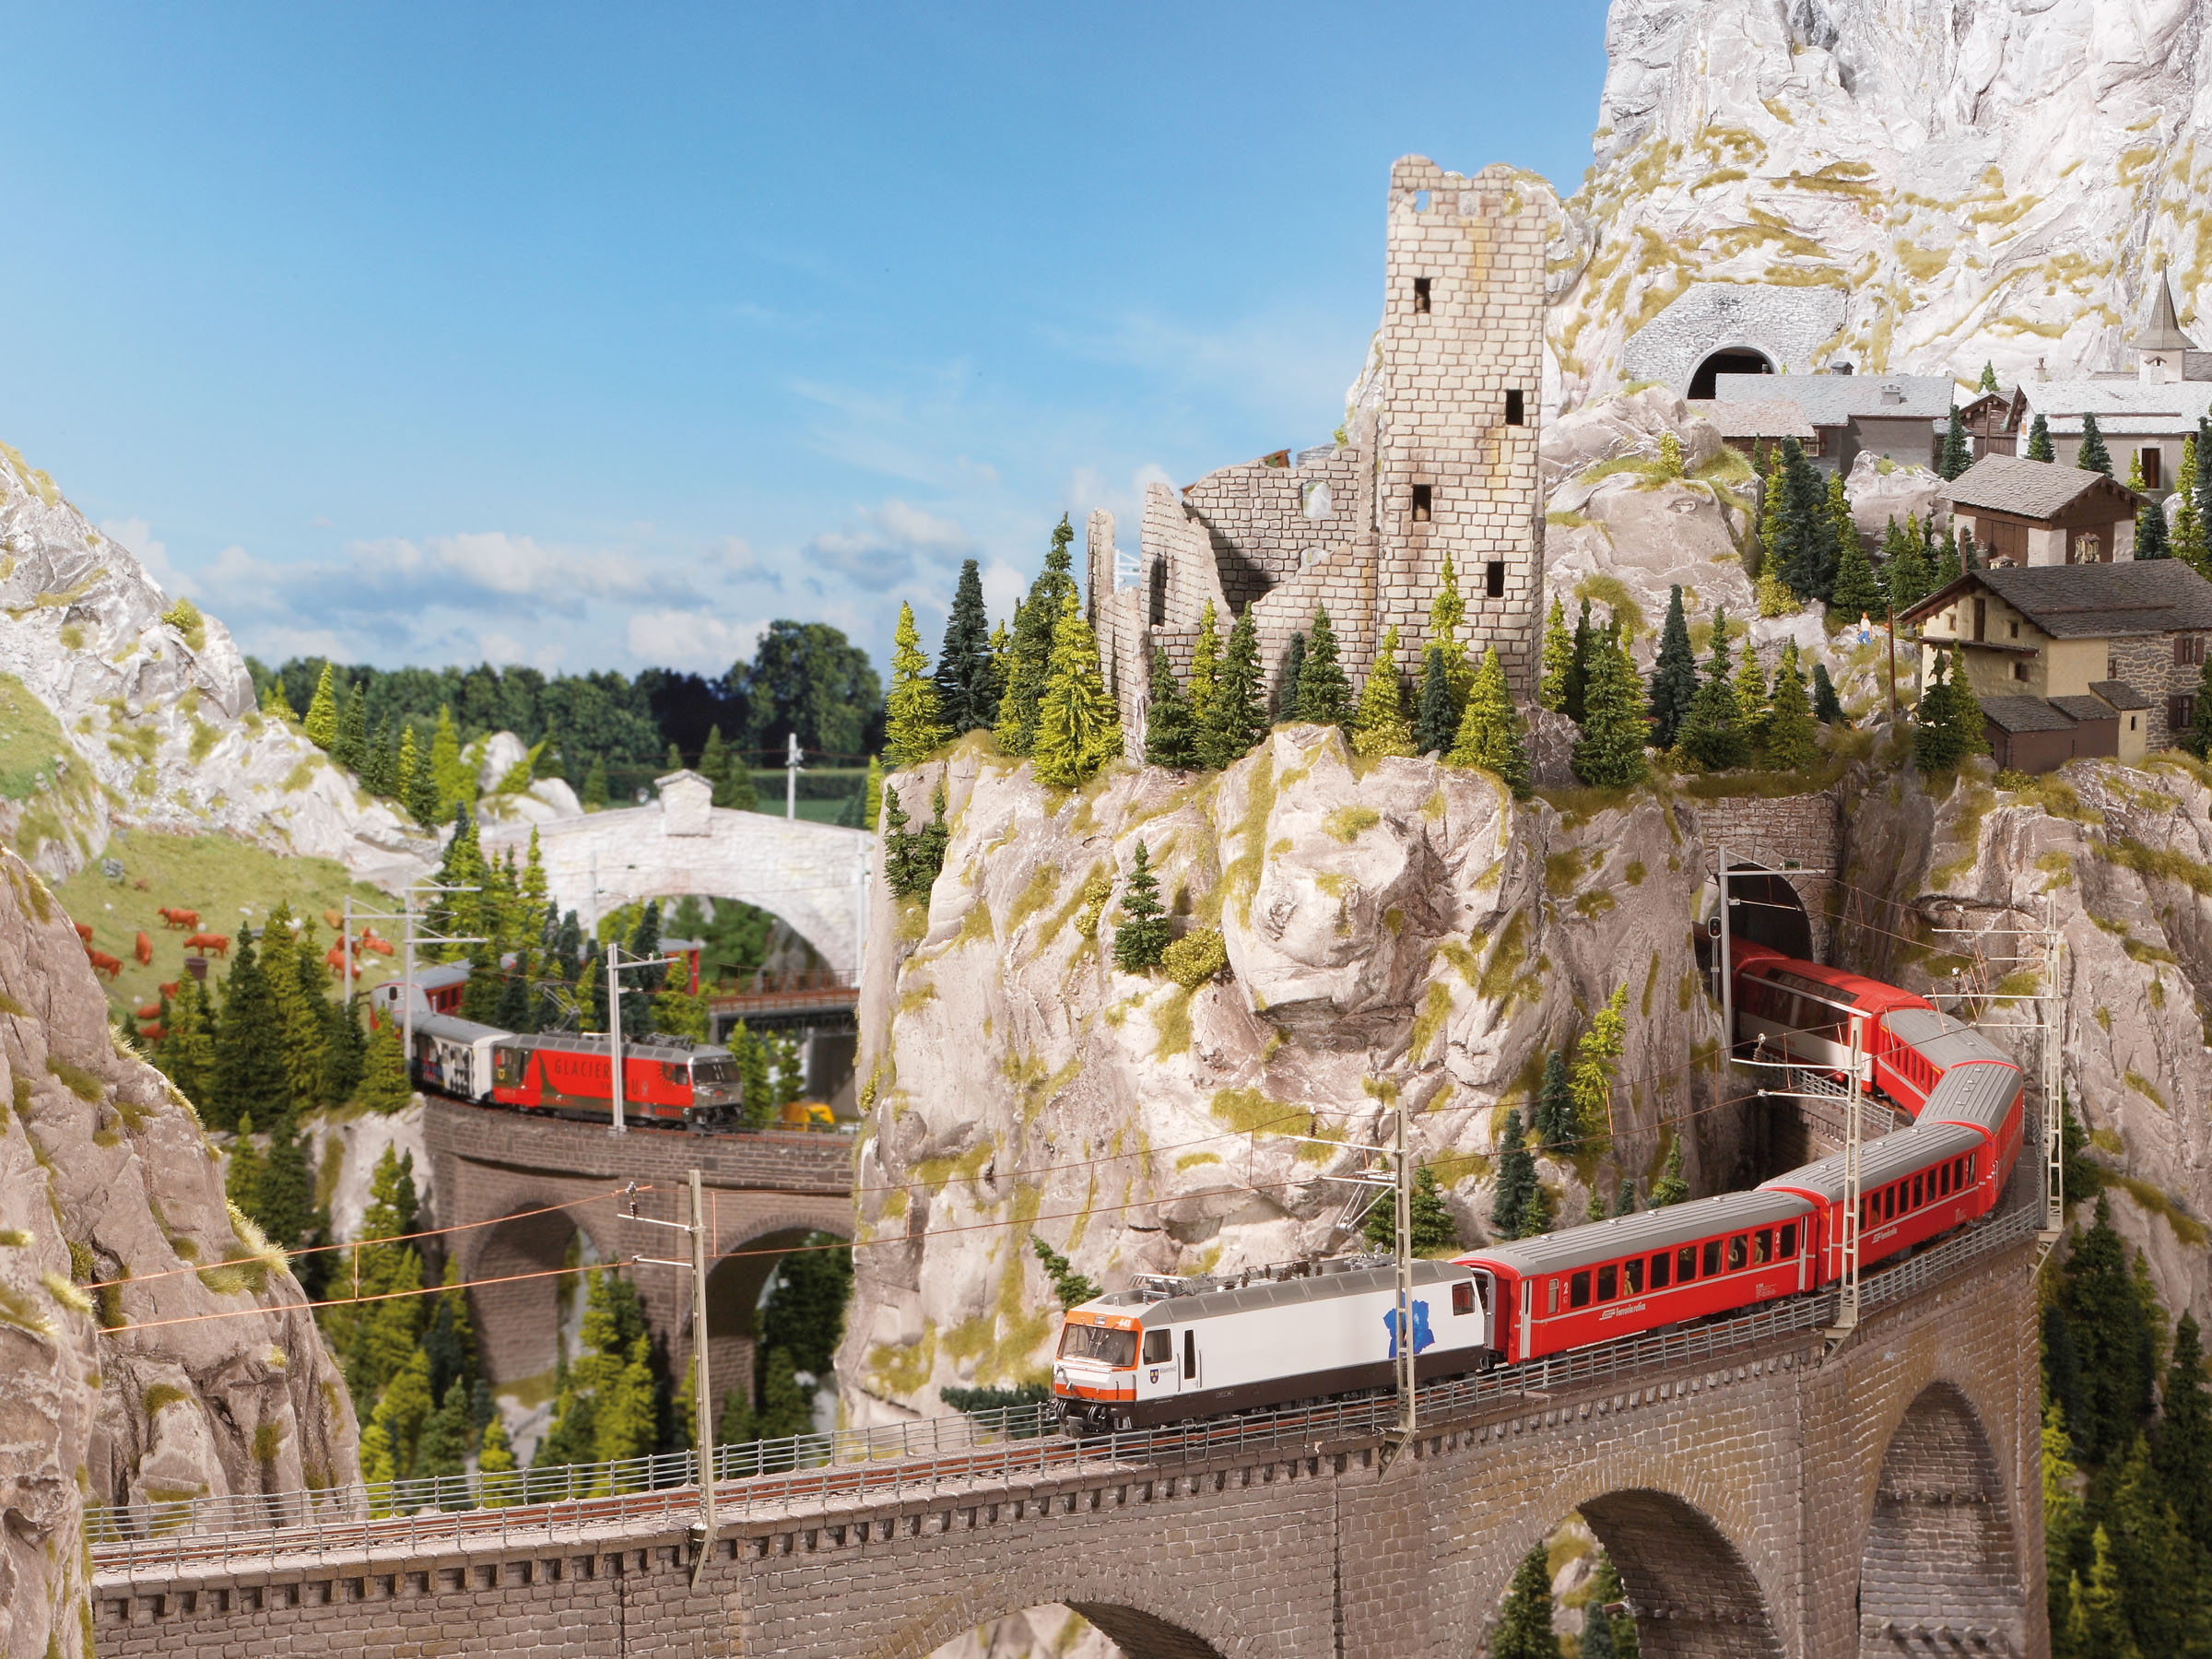 modeltrein, modelbaan, Макет железной дороги - Fascinating video of the world’s largest HO scale model railway layout - Miniatur Wunderland Germany